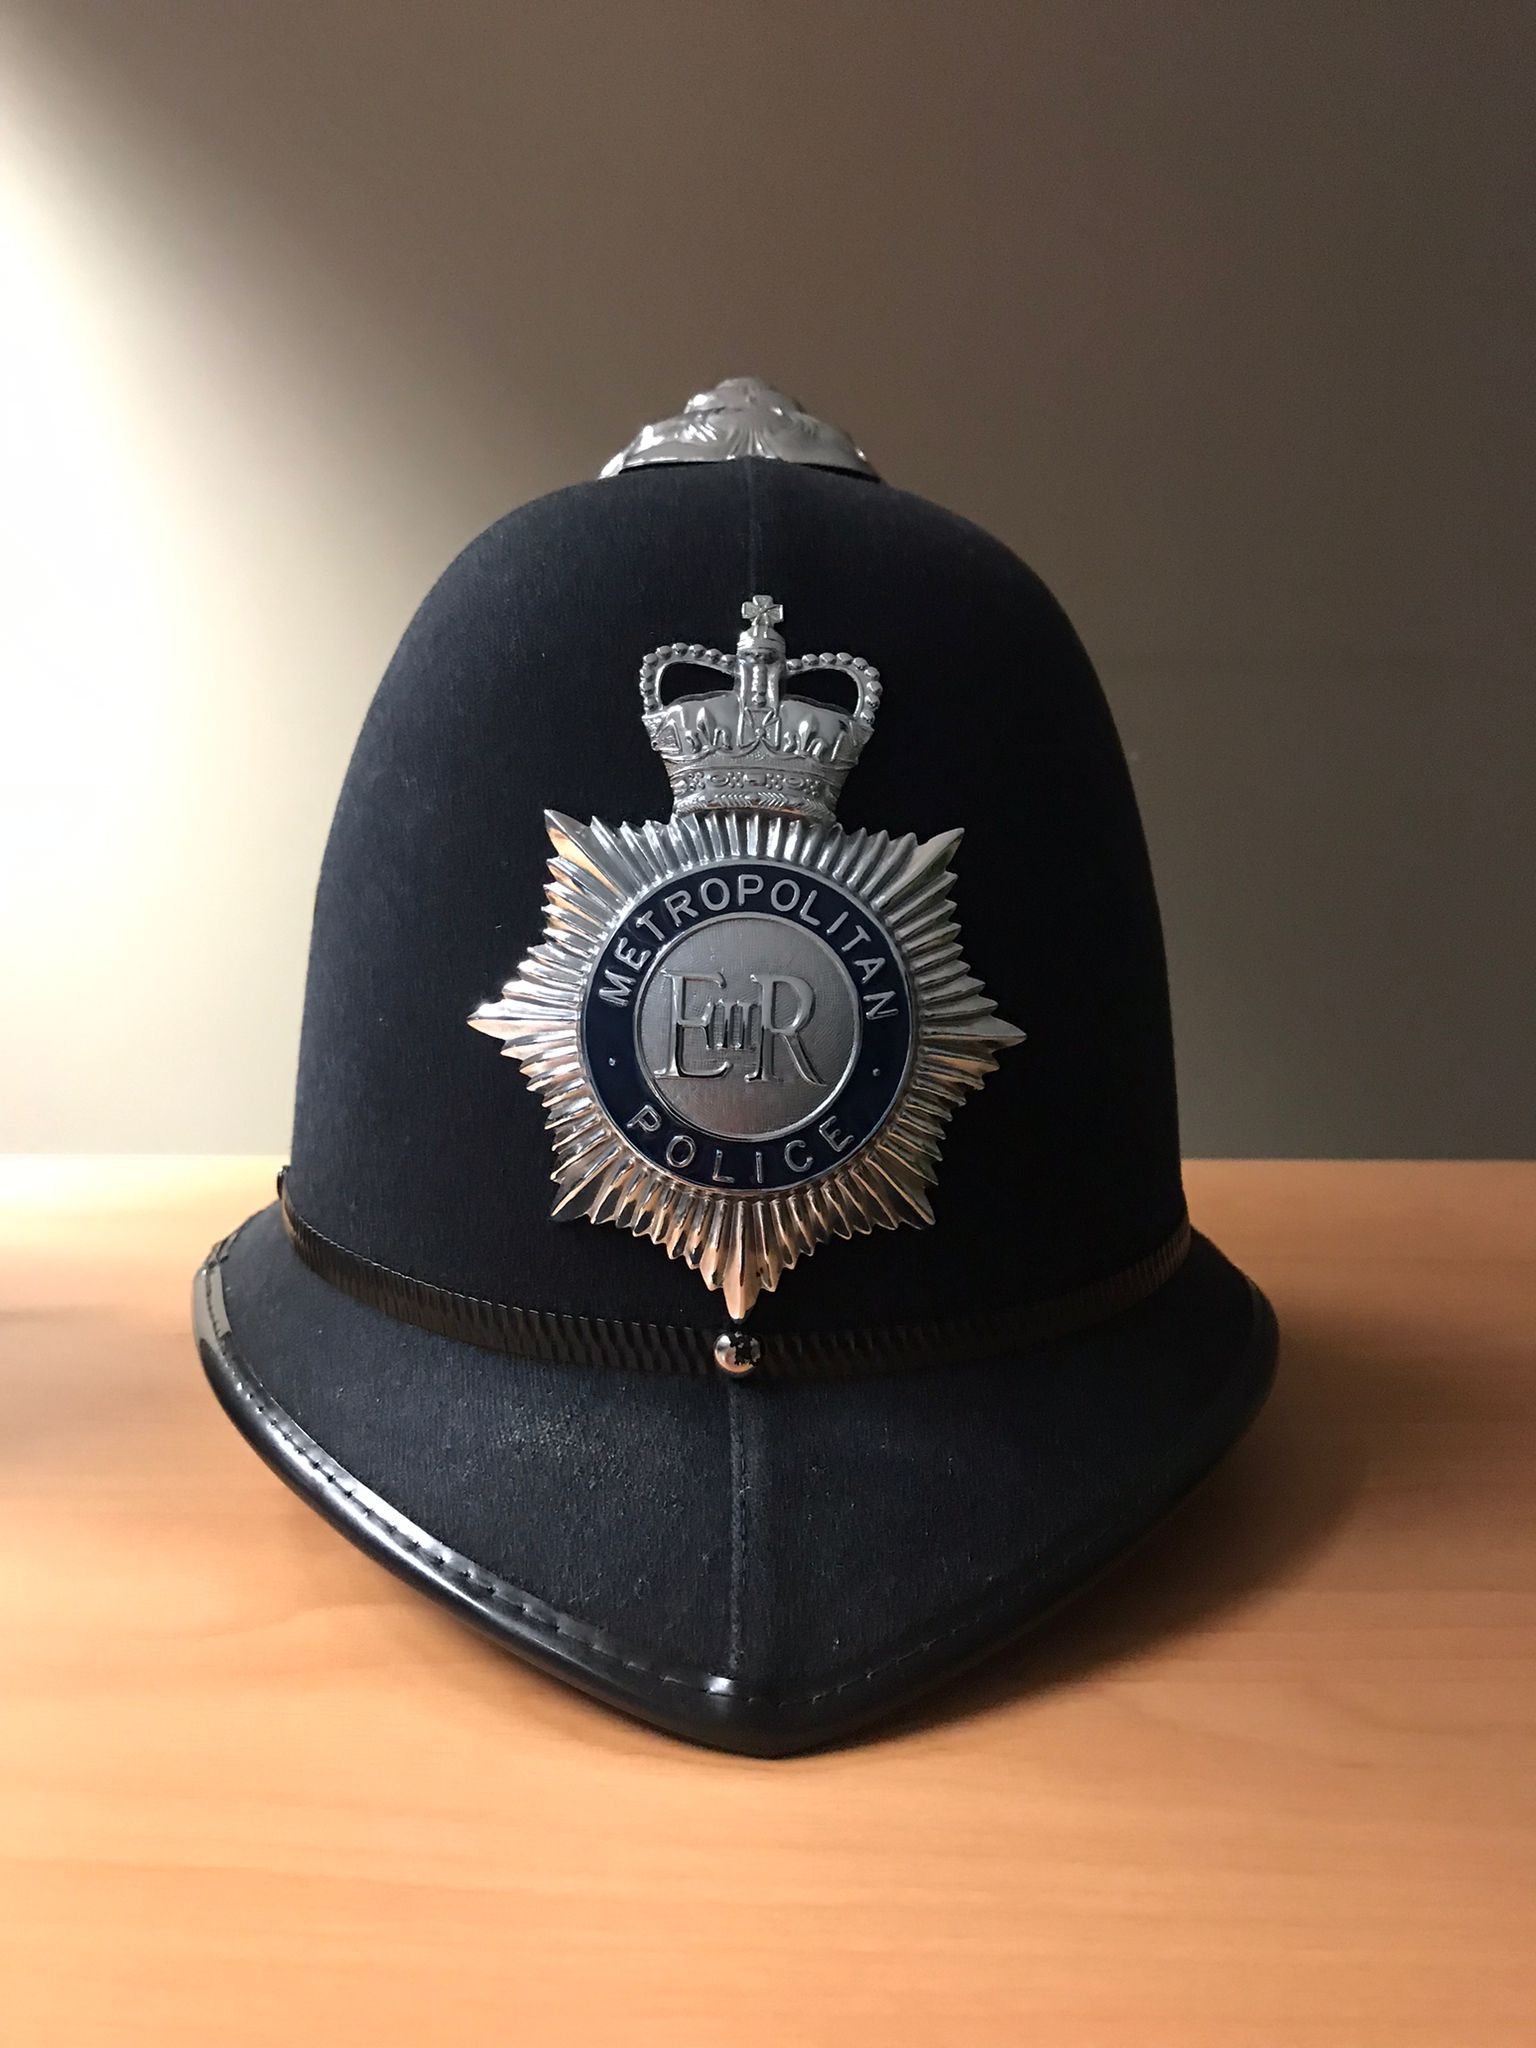 Police Patch Hunter - British Transport Police